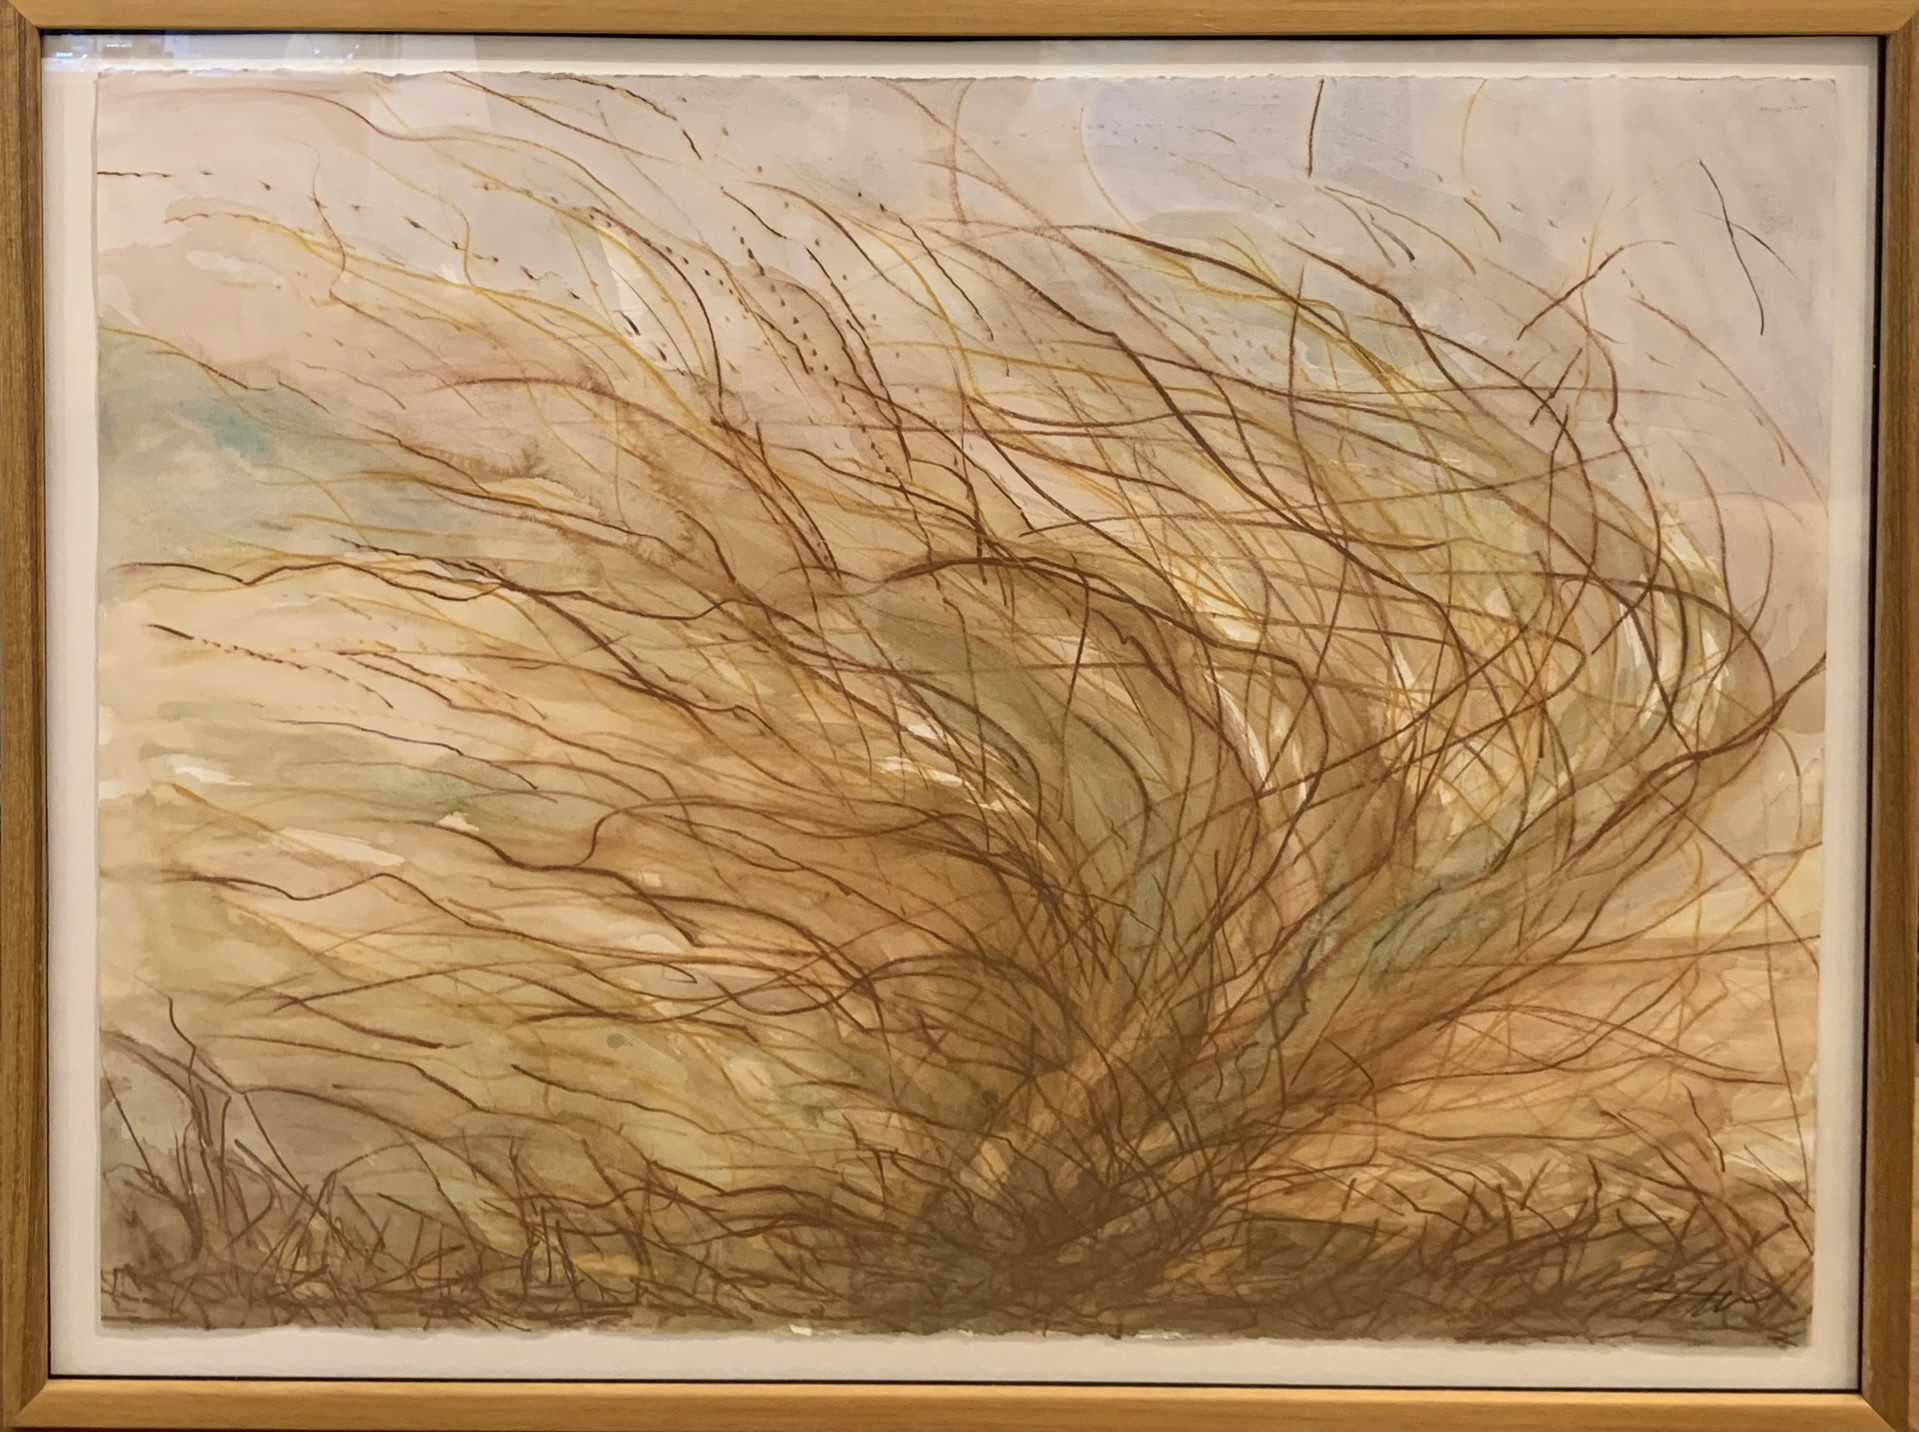 Sea Grass #5 by Fritzi Huber